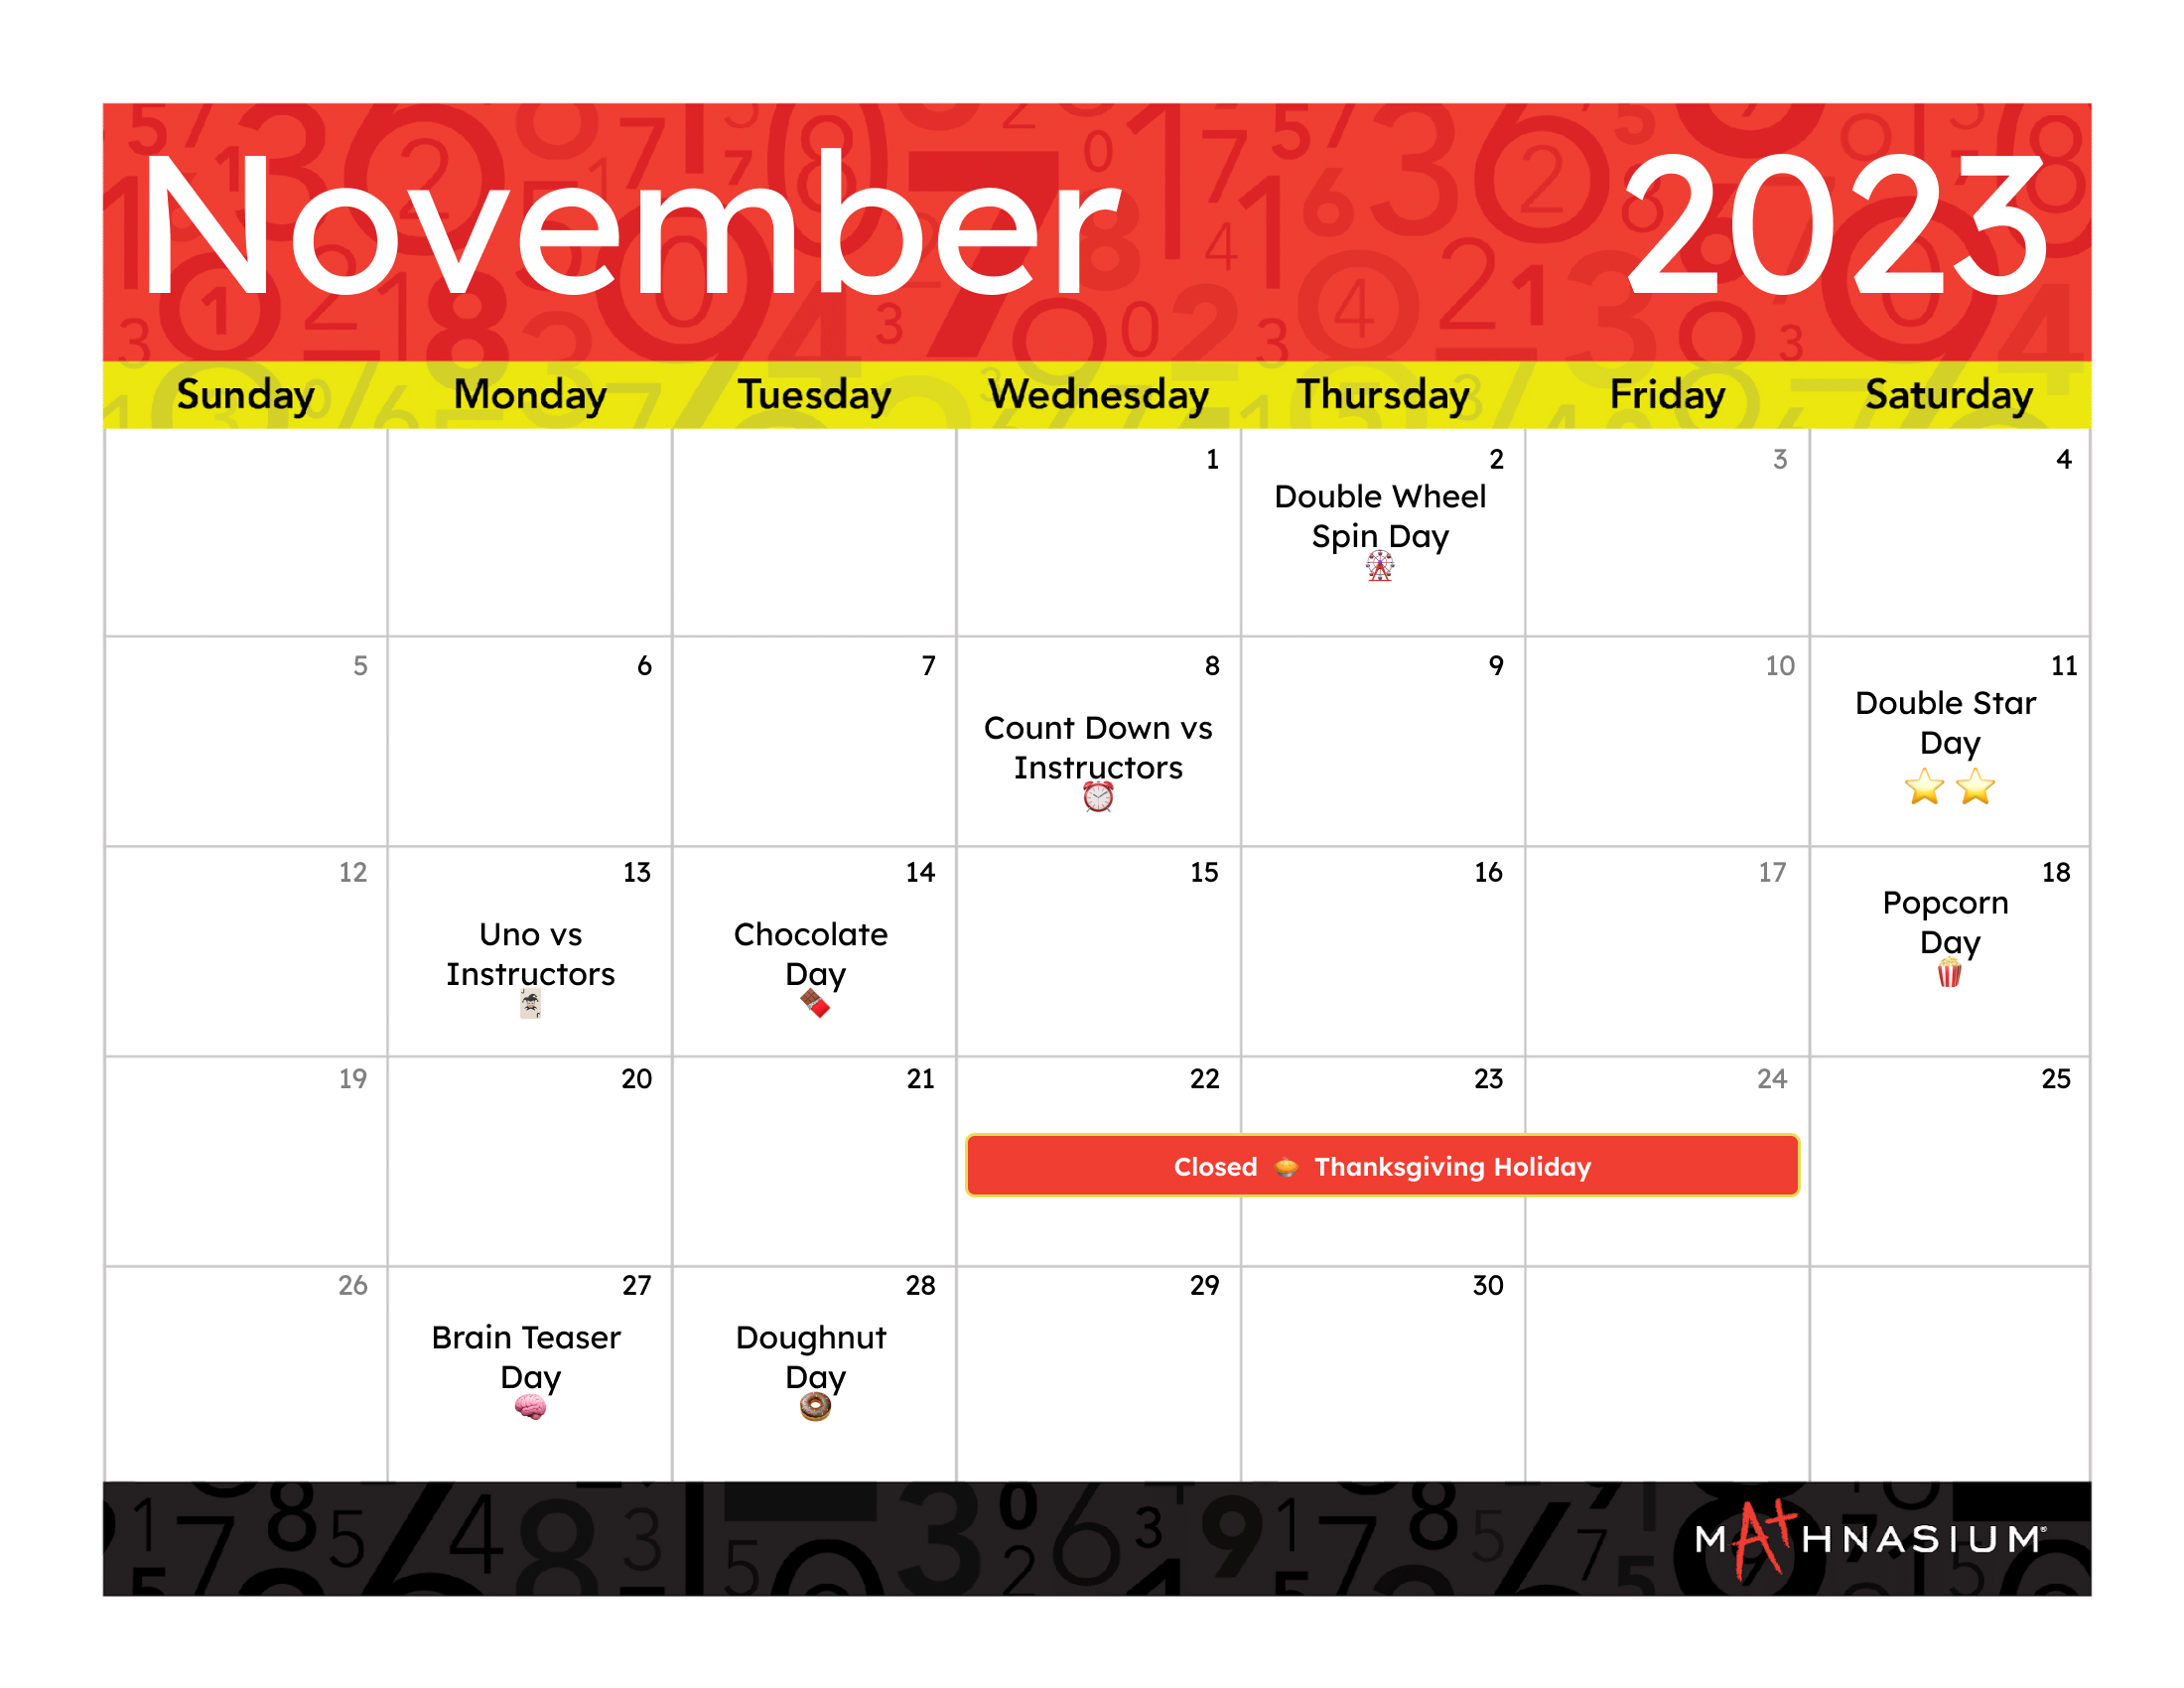 November Events Calendar